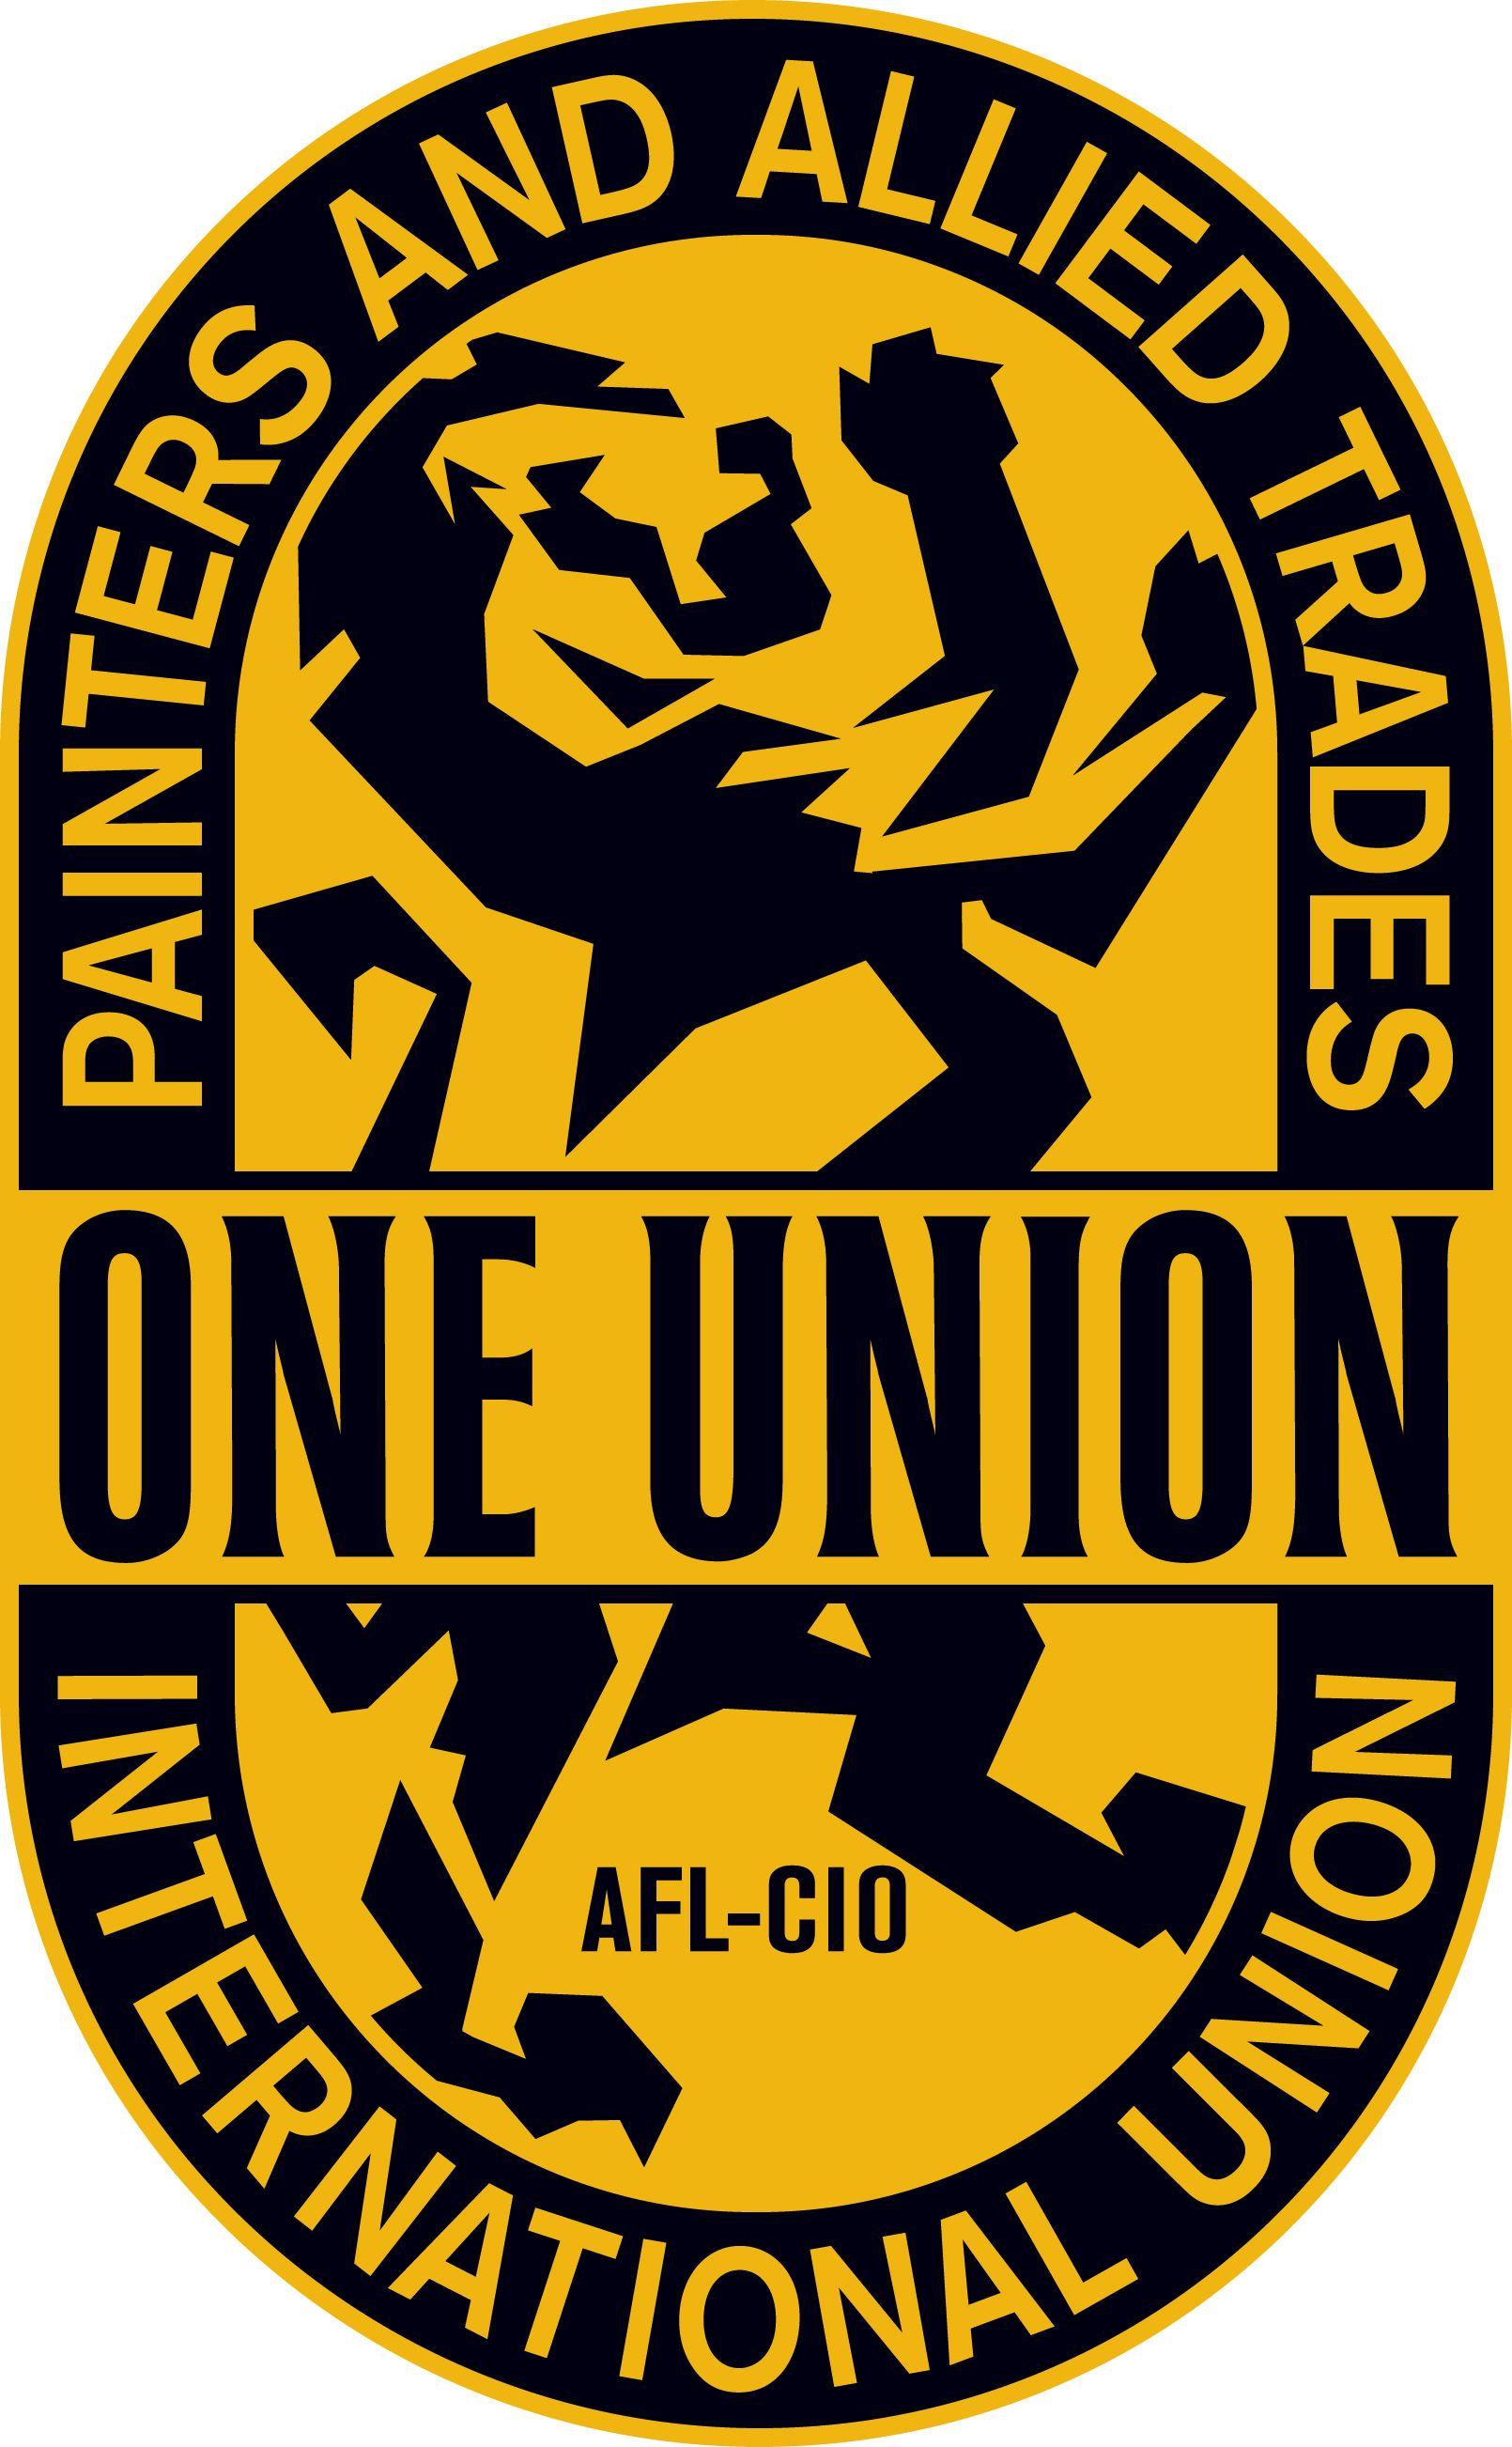 Uninion Logo - IUPAT - The International Union of Painters and Allied Trades